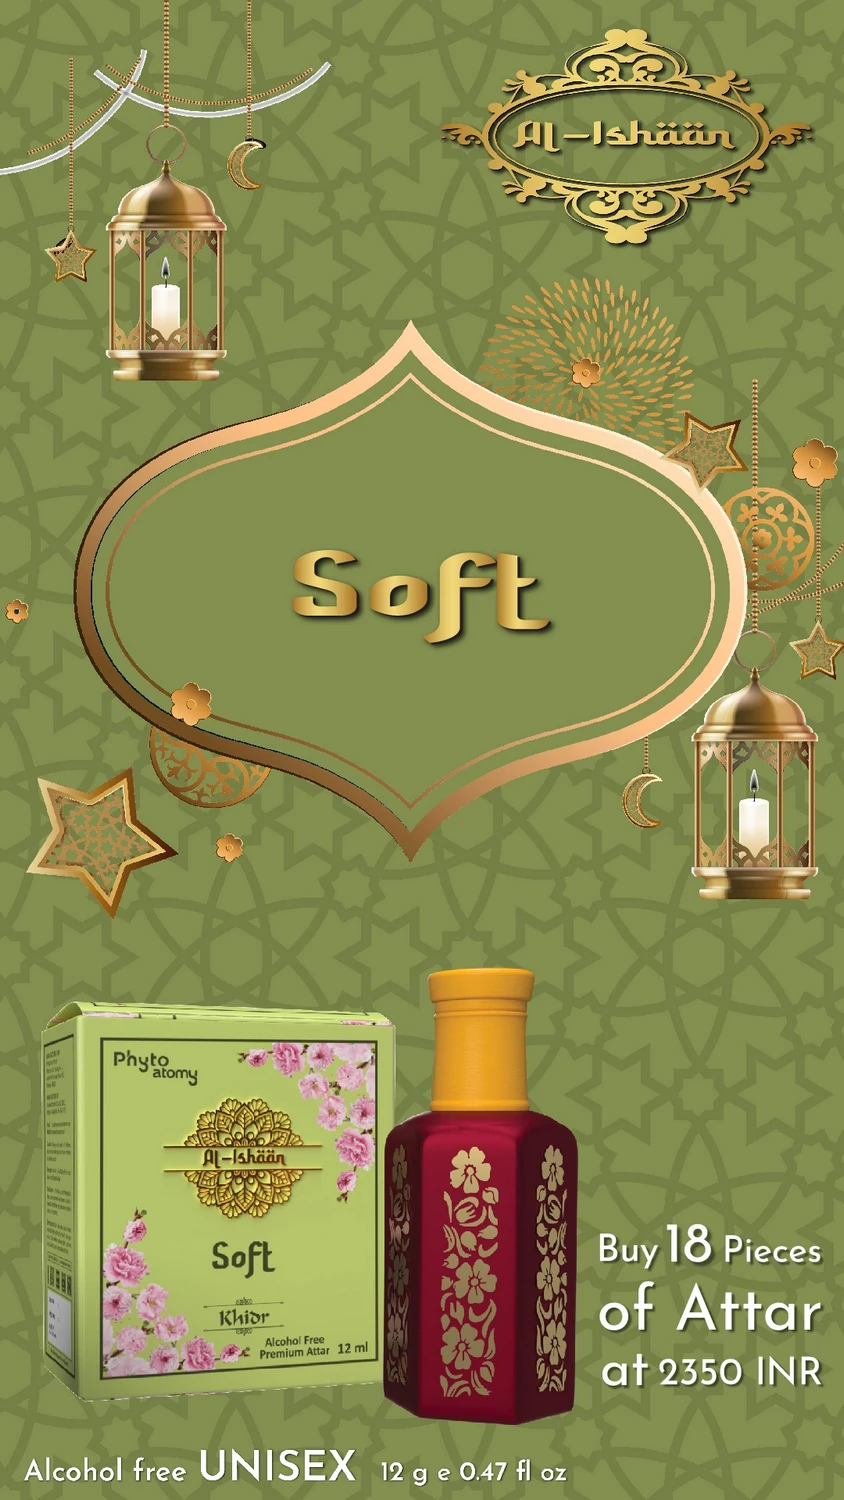 SCBV B2B Al Ishan Soft Attar (12ml)- 18 Pcs.